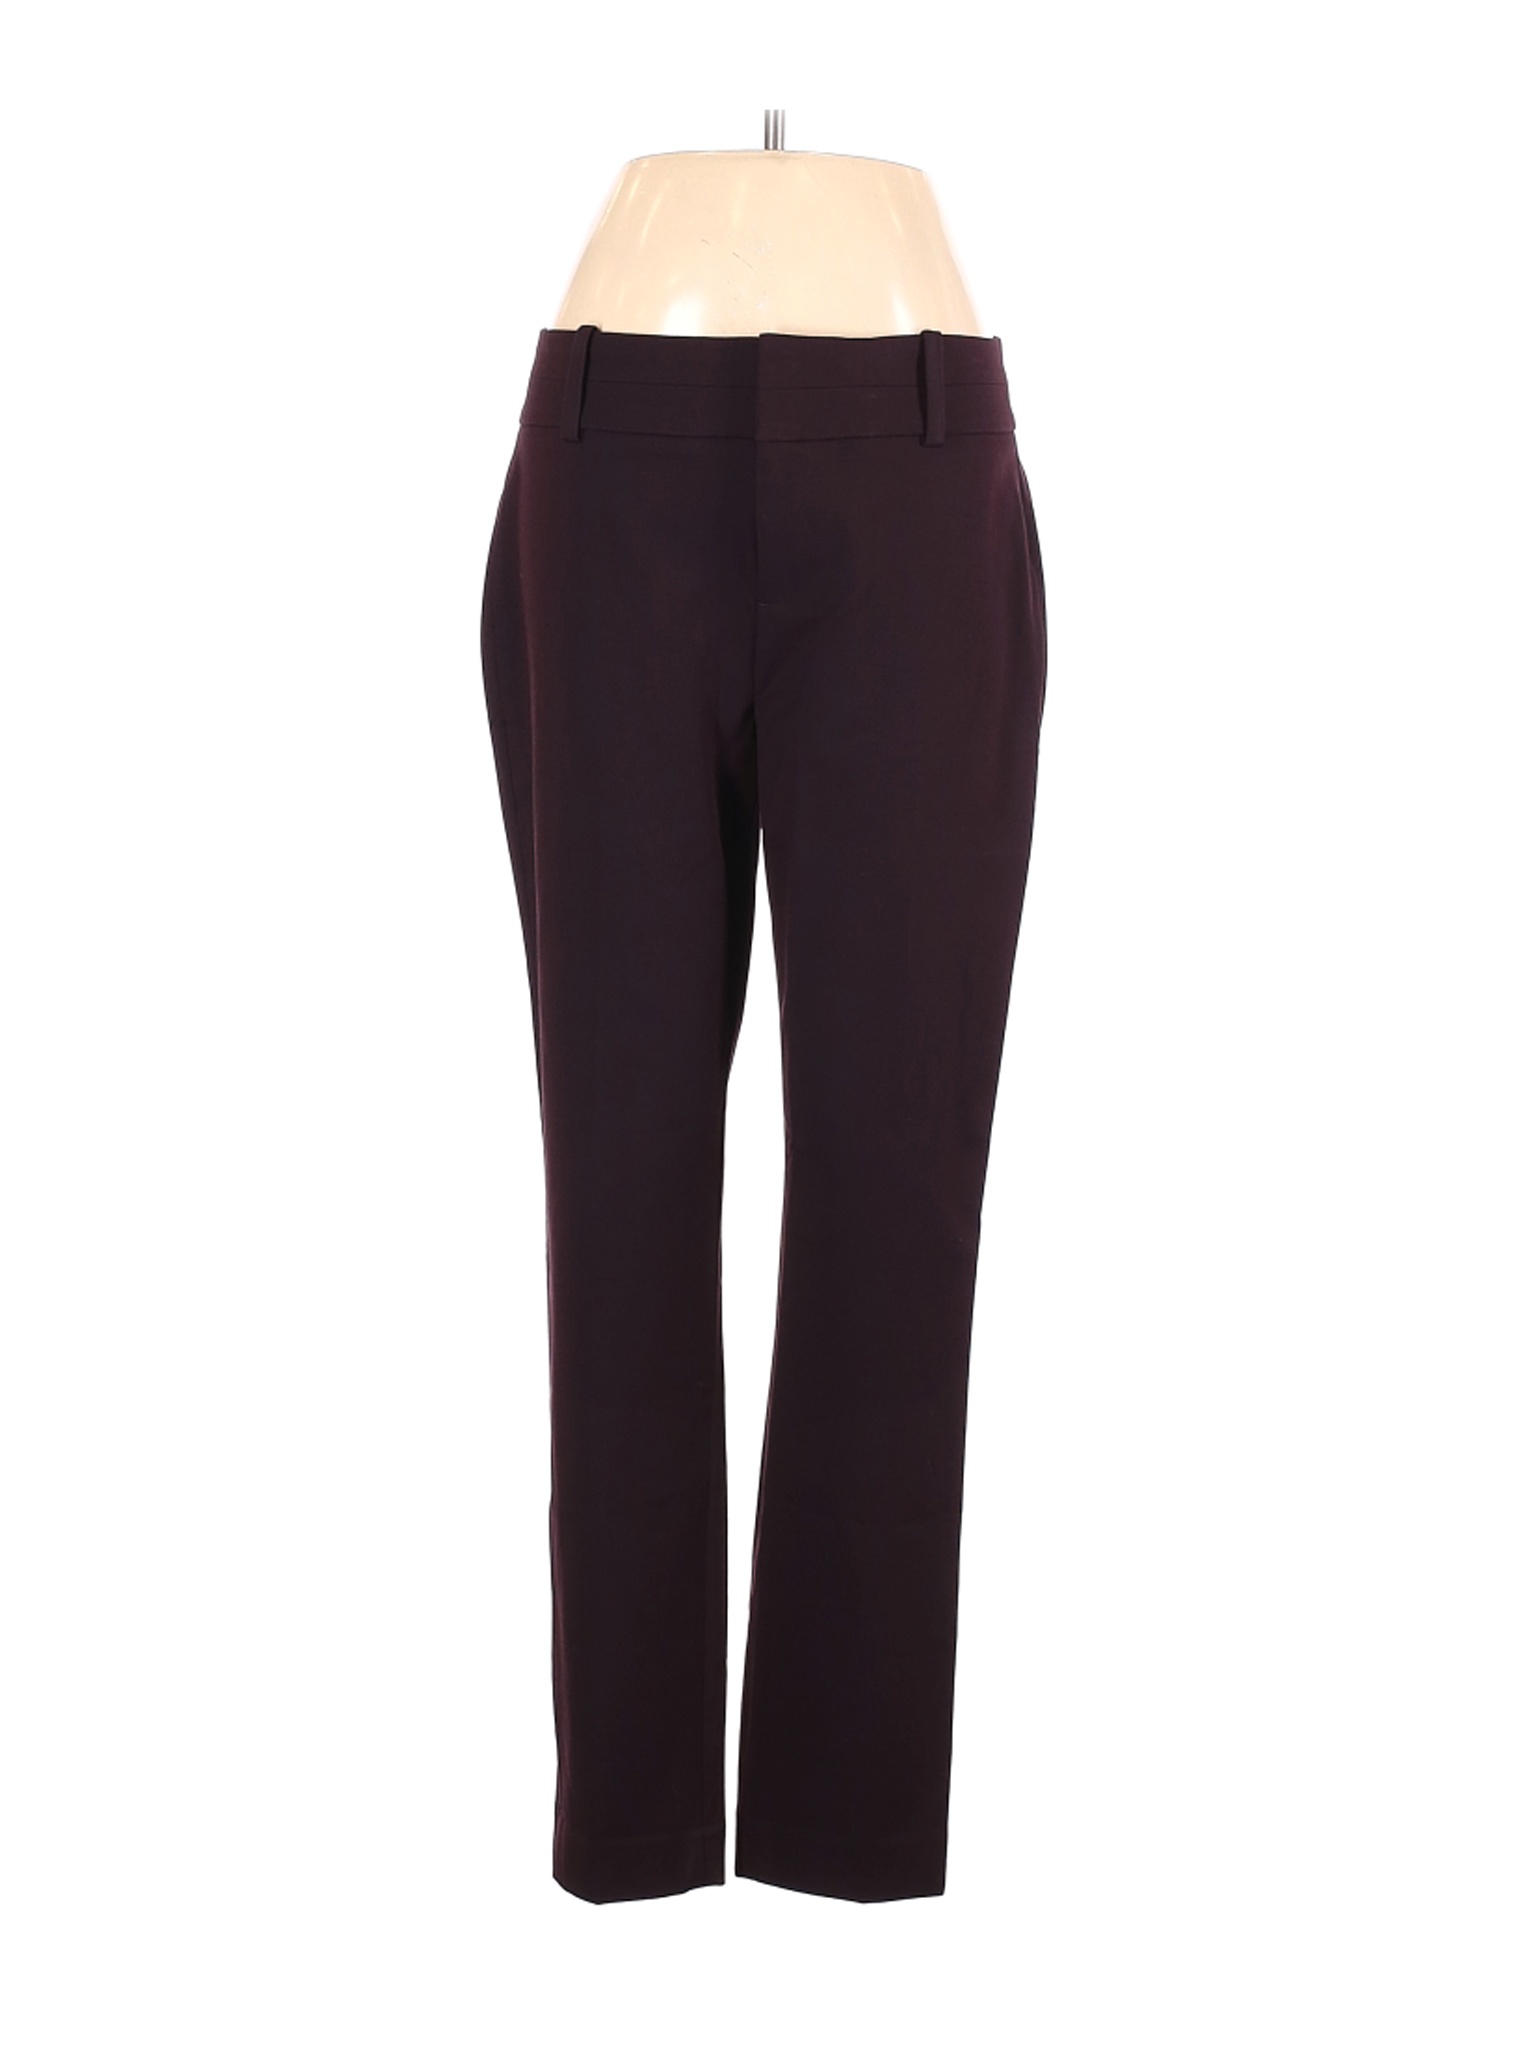 NWT Calvin Klein Women Purple Dress Pants 6 | eBay